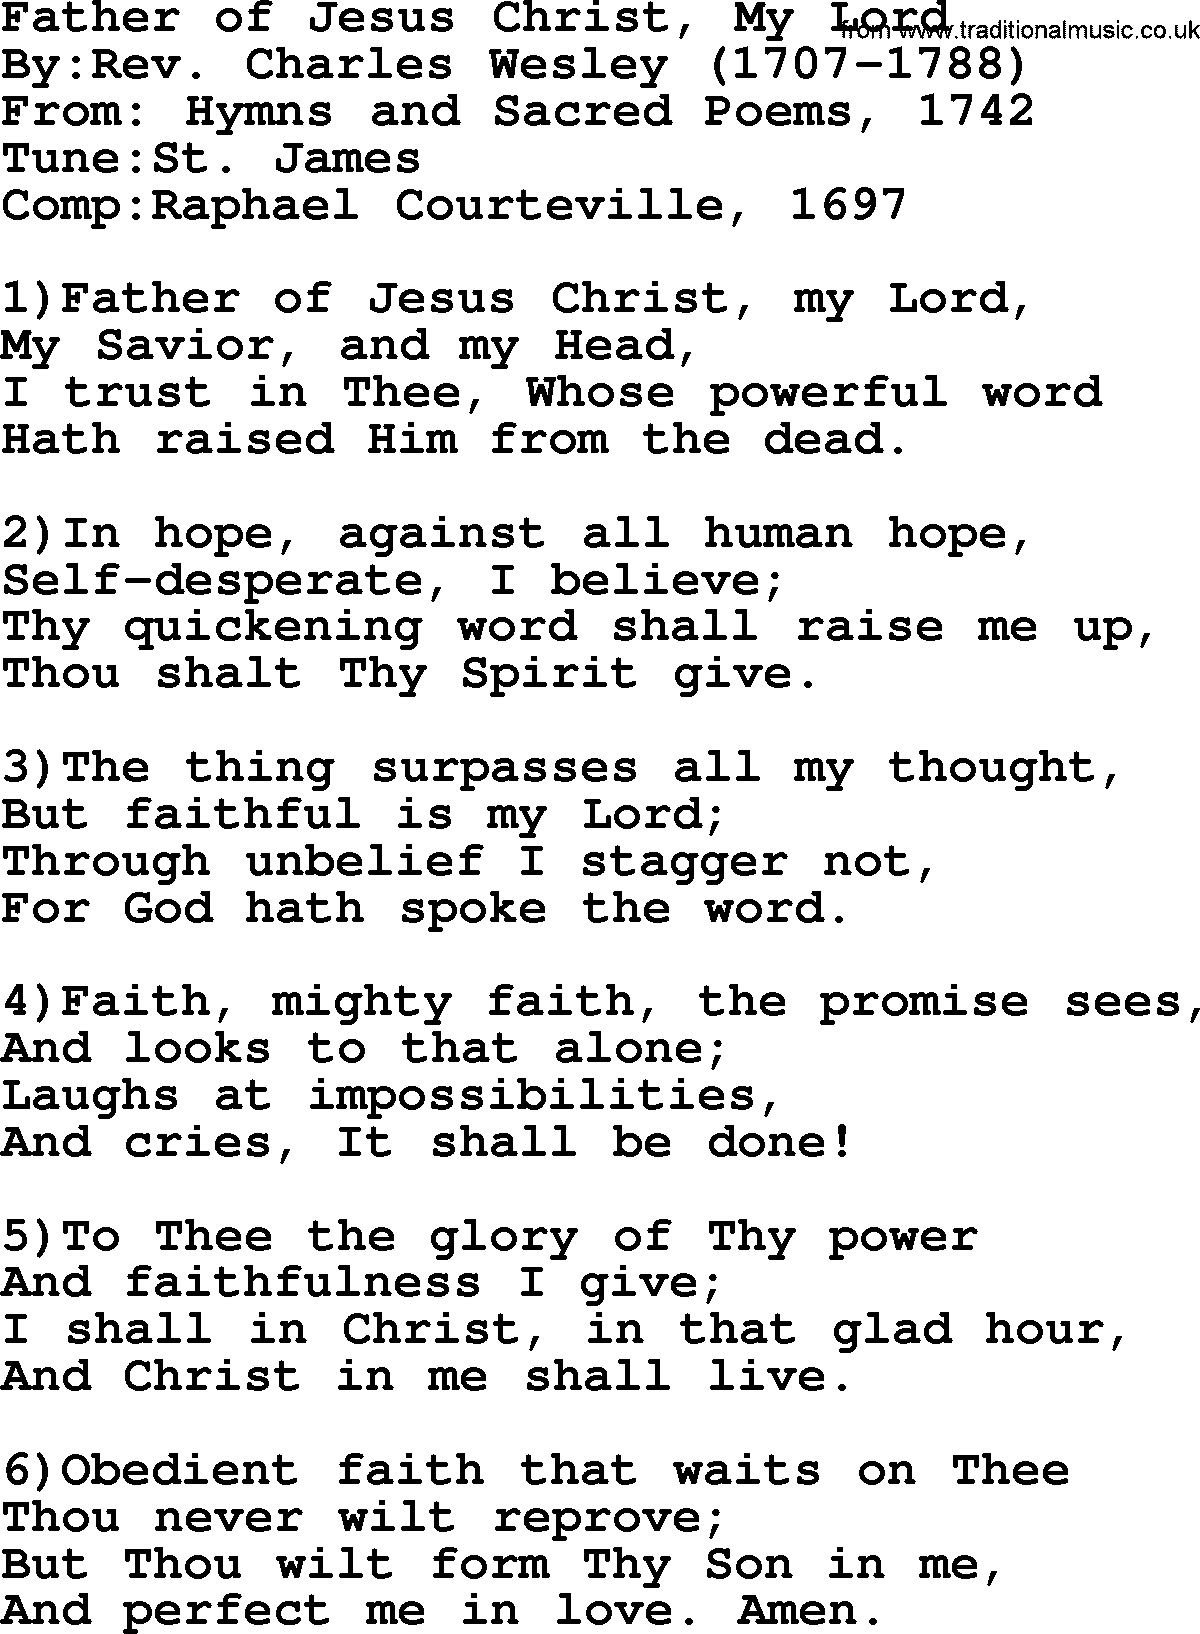 Methodist Hymn: Father Of Jesus Christ, My Lord, lyrics